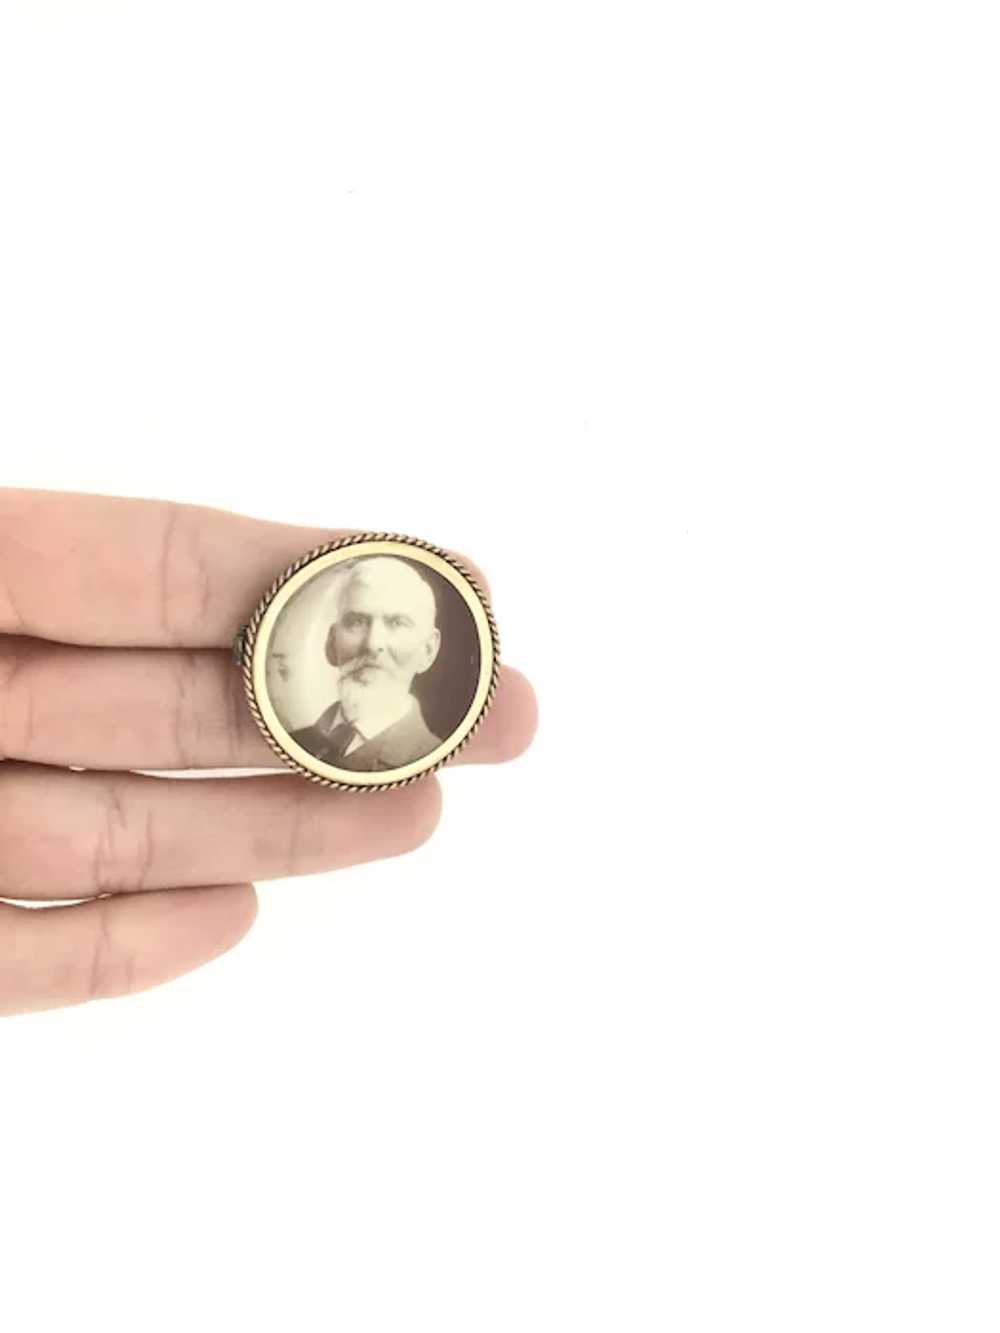 Edwardian Miniature Photograph Brooch Pin - image 5